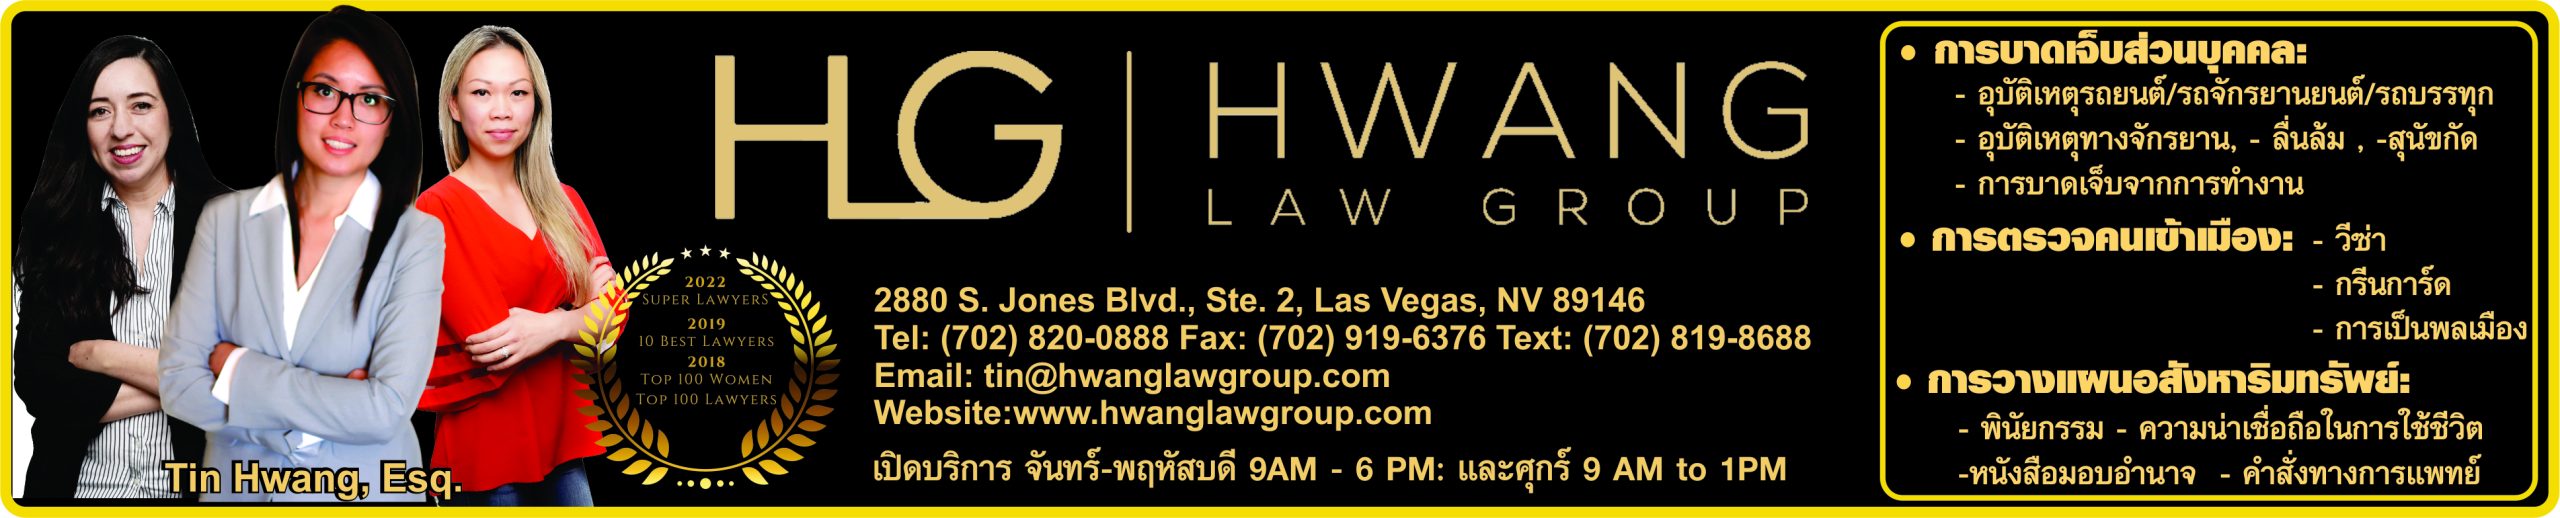 Hwang Law Group